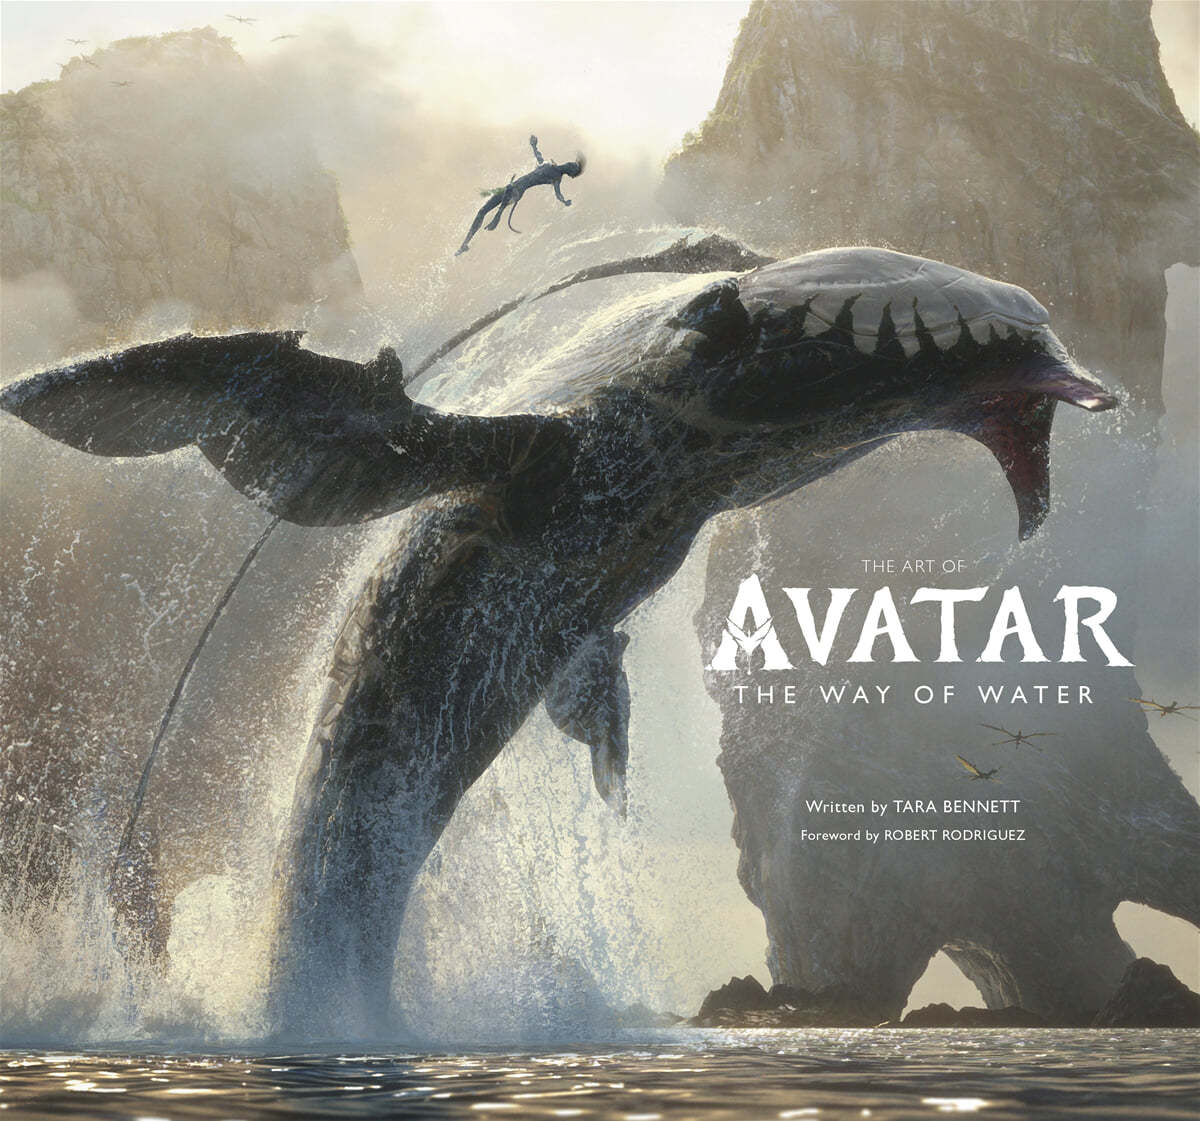 The Art of Avatar the Way of Water : 영화 아바타 2 물의 길 아트북 (영국판) 